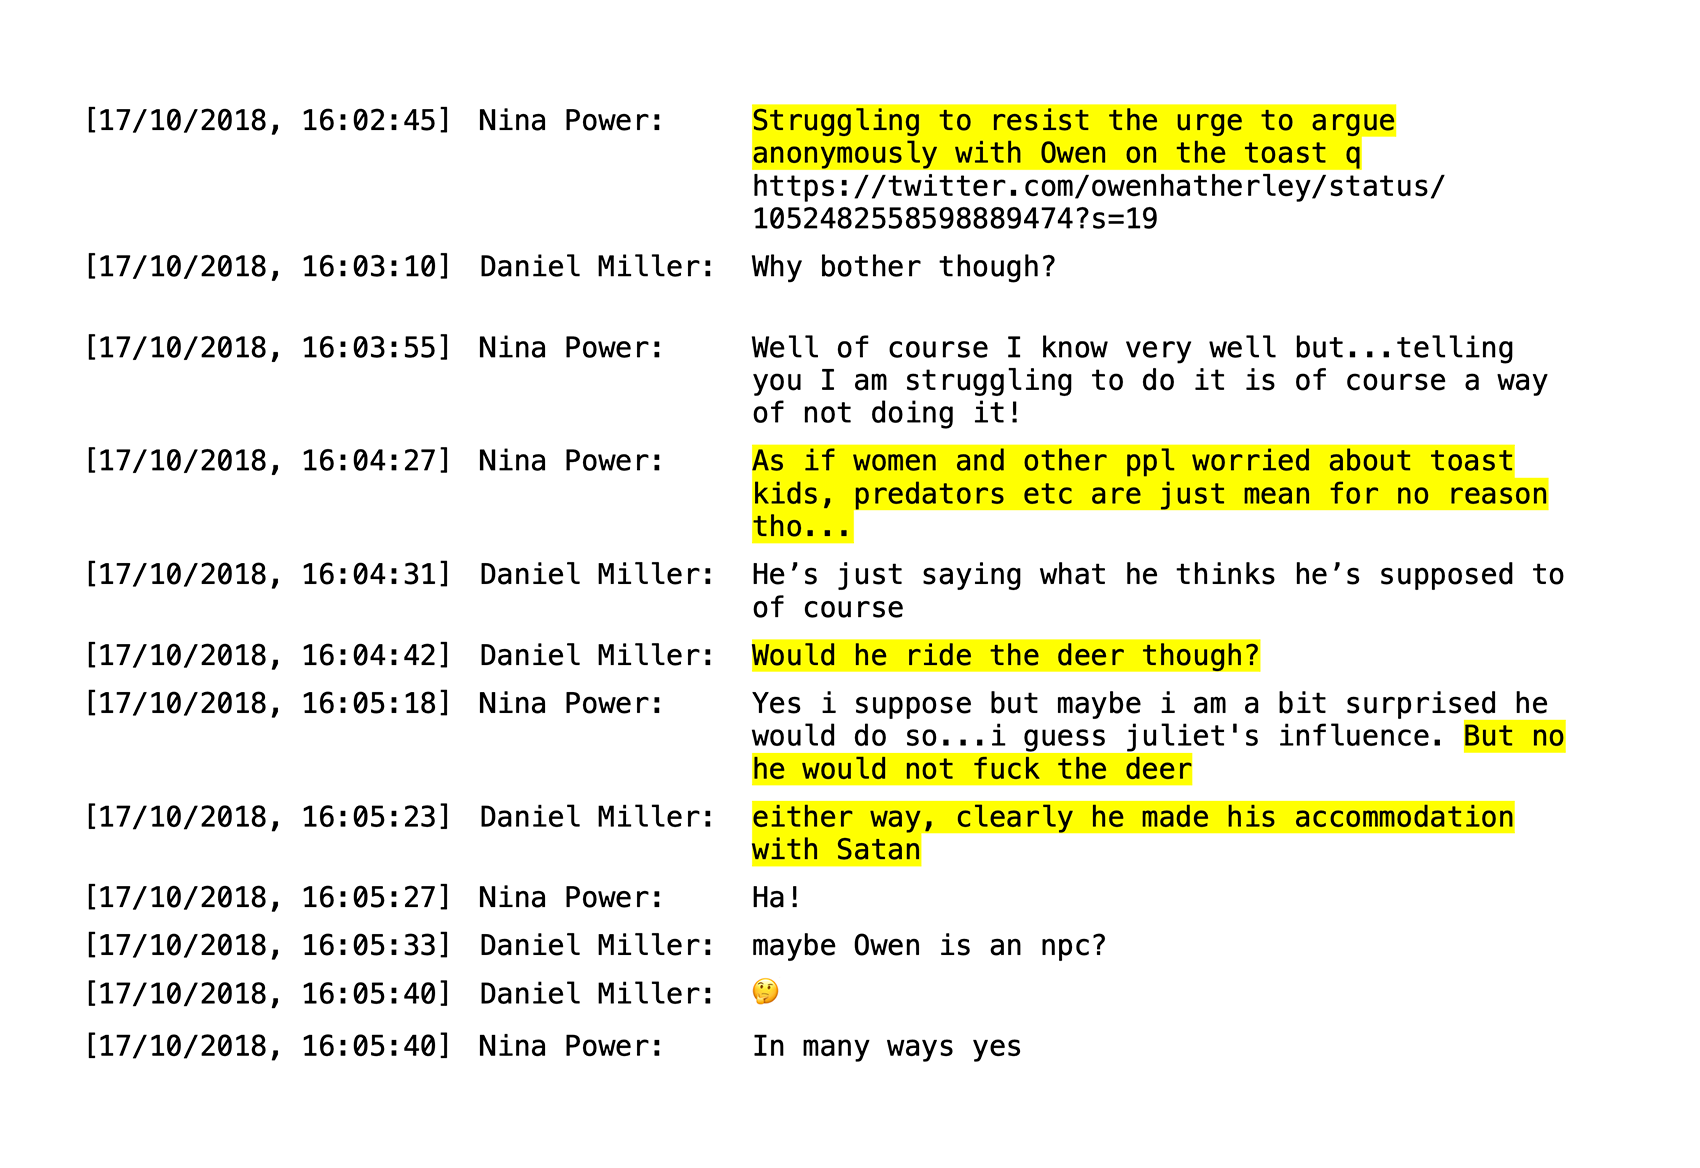 Nina Power and Daniel Miller WhatsApp messages